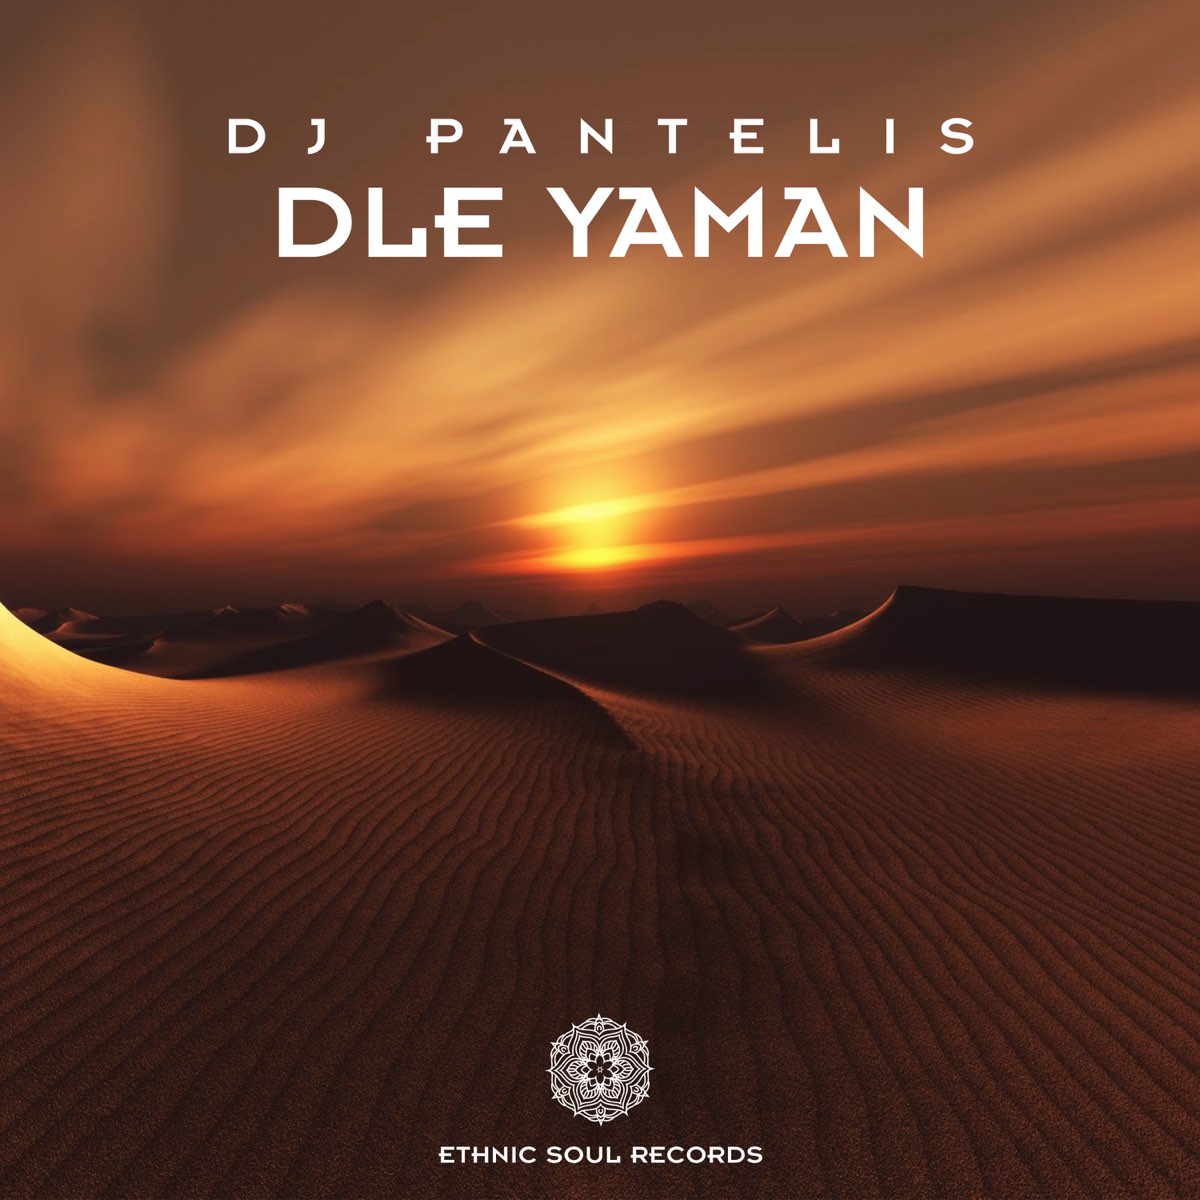 Dle Yaman - Single by DJ Pantelis on Apple Music